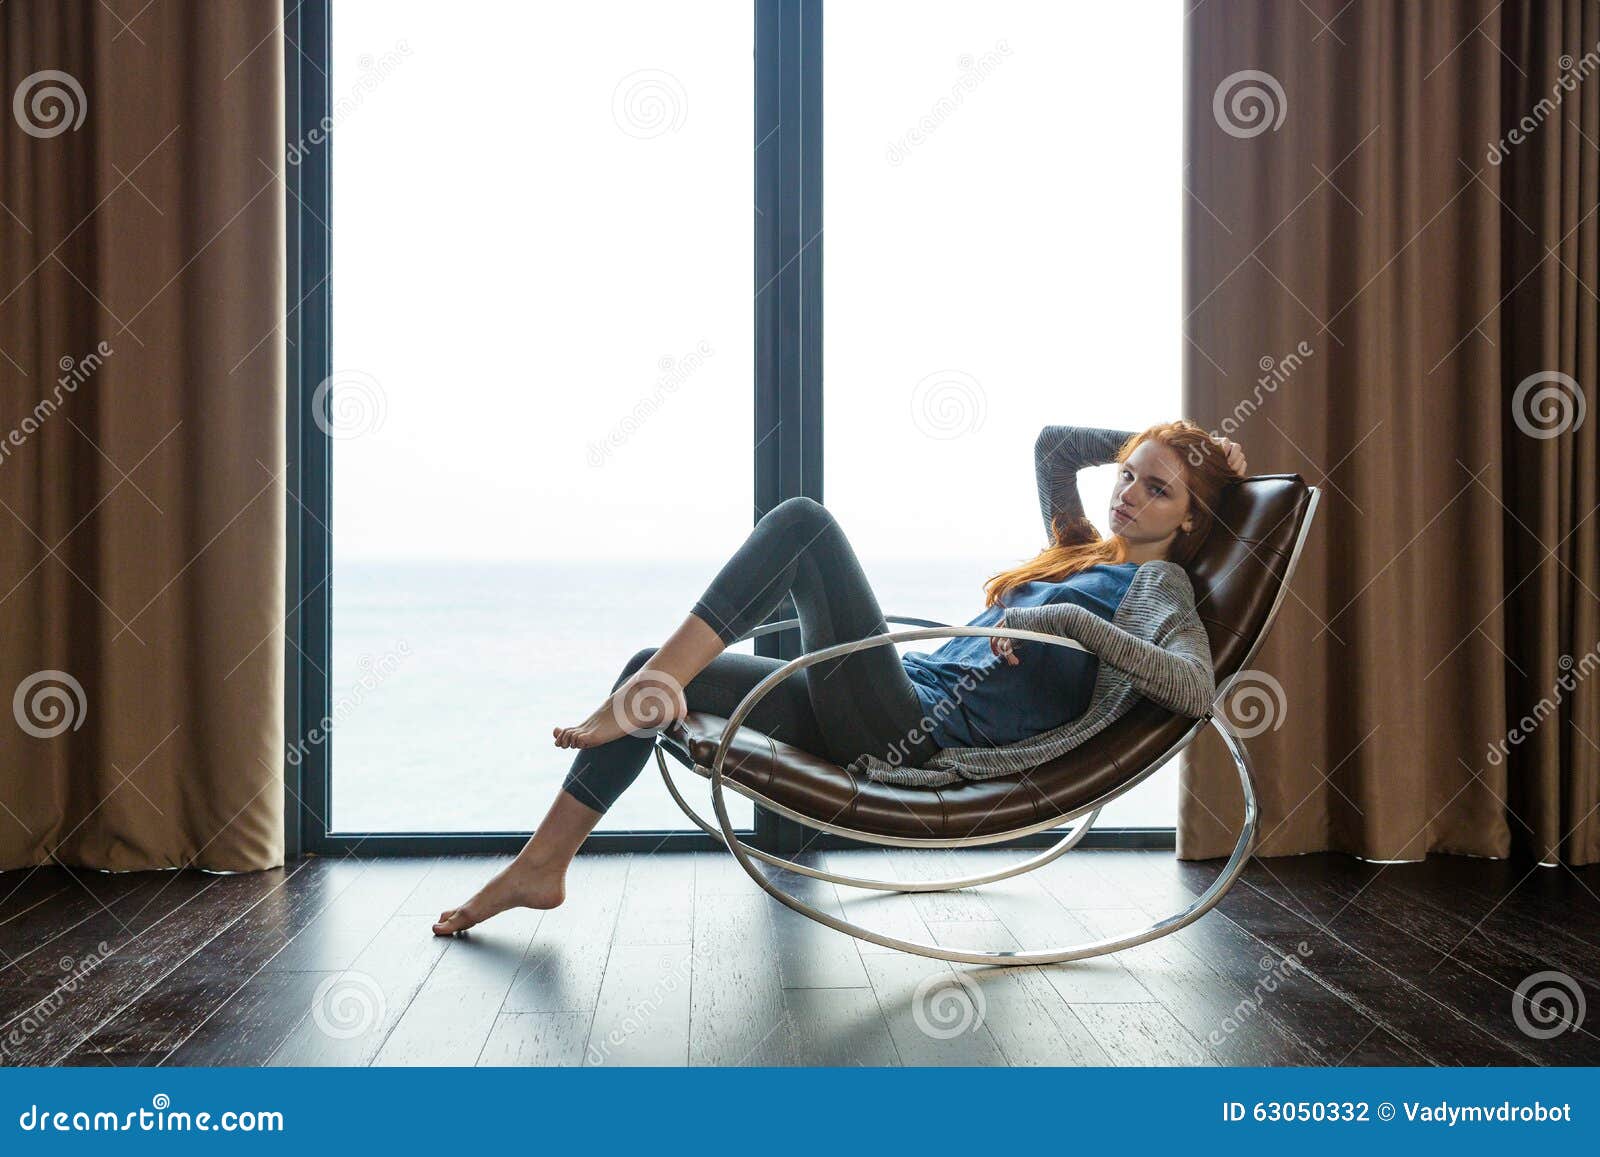 redhead woman sitting on rocking chair